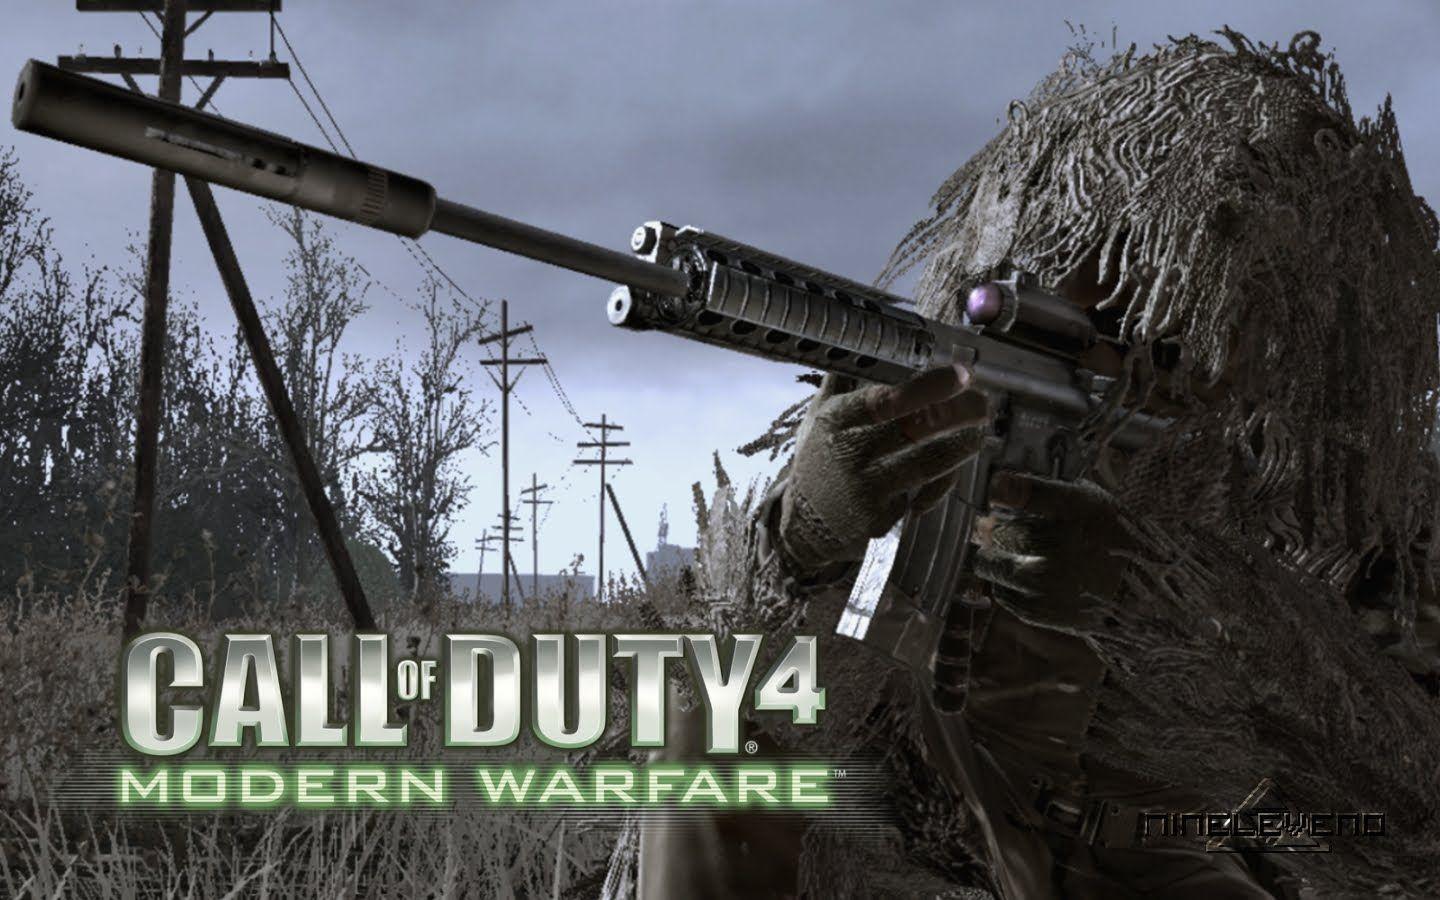 Get Free Call of duty 4 Modern Warfare Cheats. Call of Duty Cheats